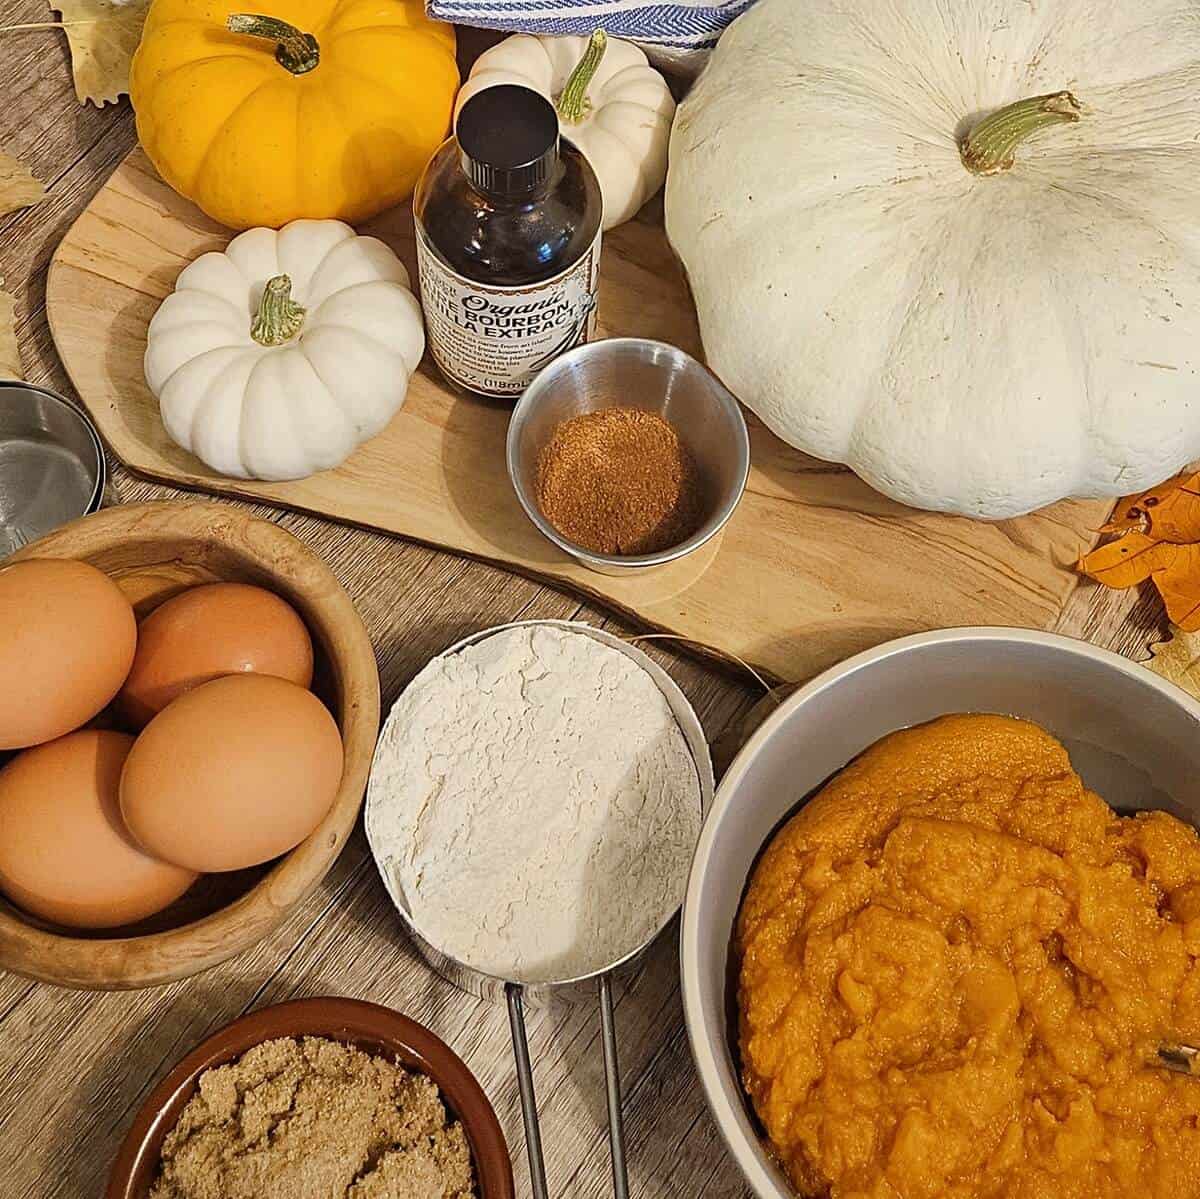 ingredients for pumpkin whoopie pies; vanilla extract, pumpkin pie spice, eggs, flour, pumpkin puree, light brown sugar.